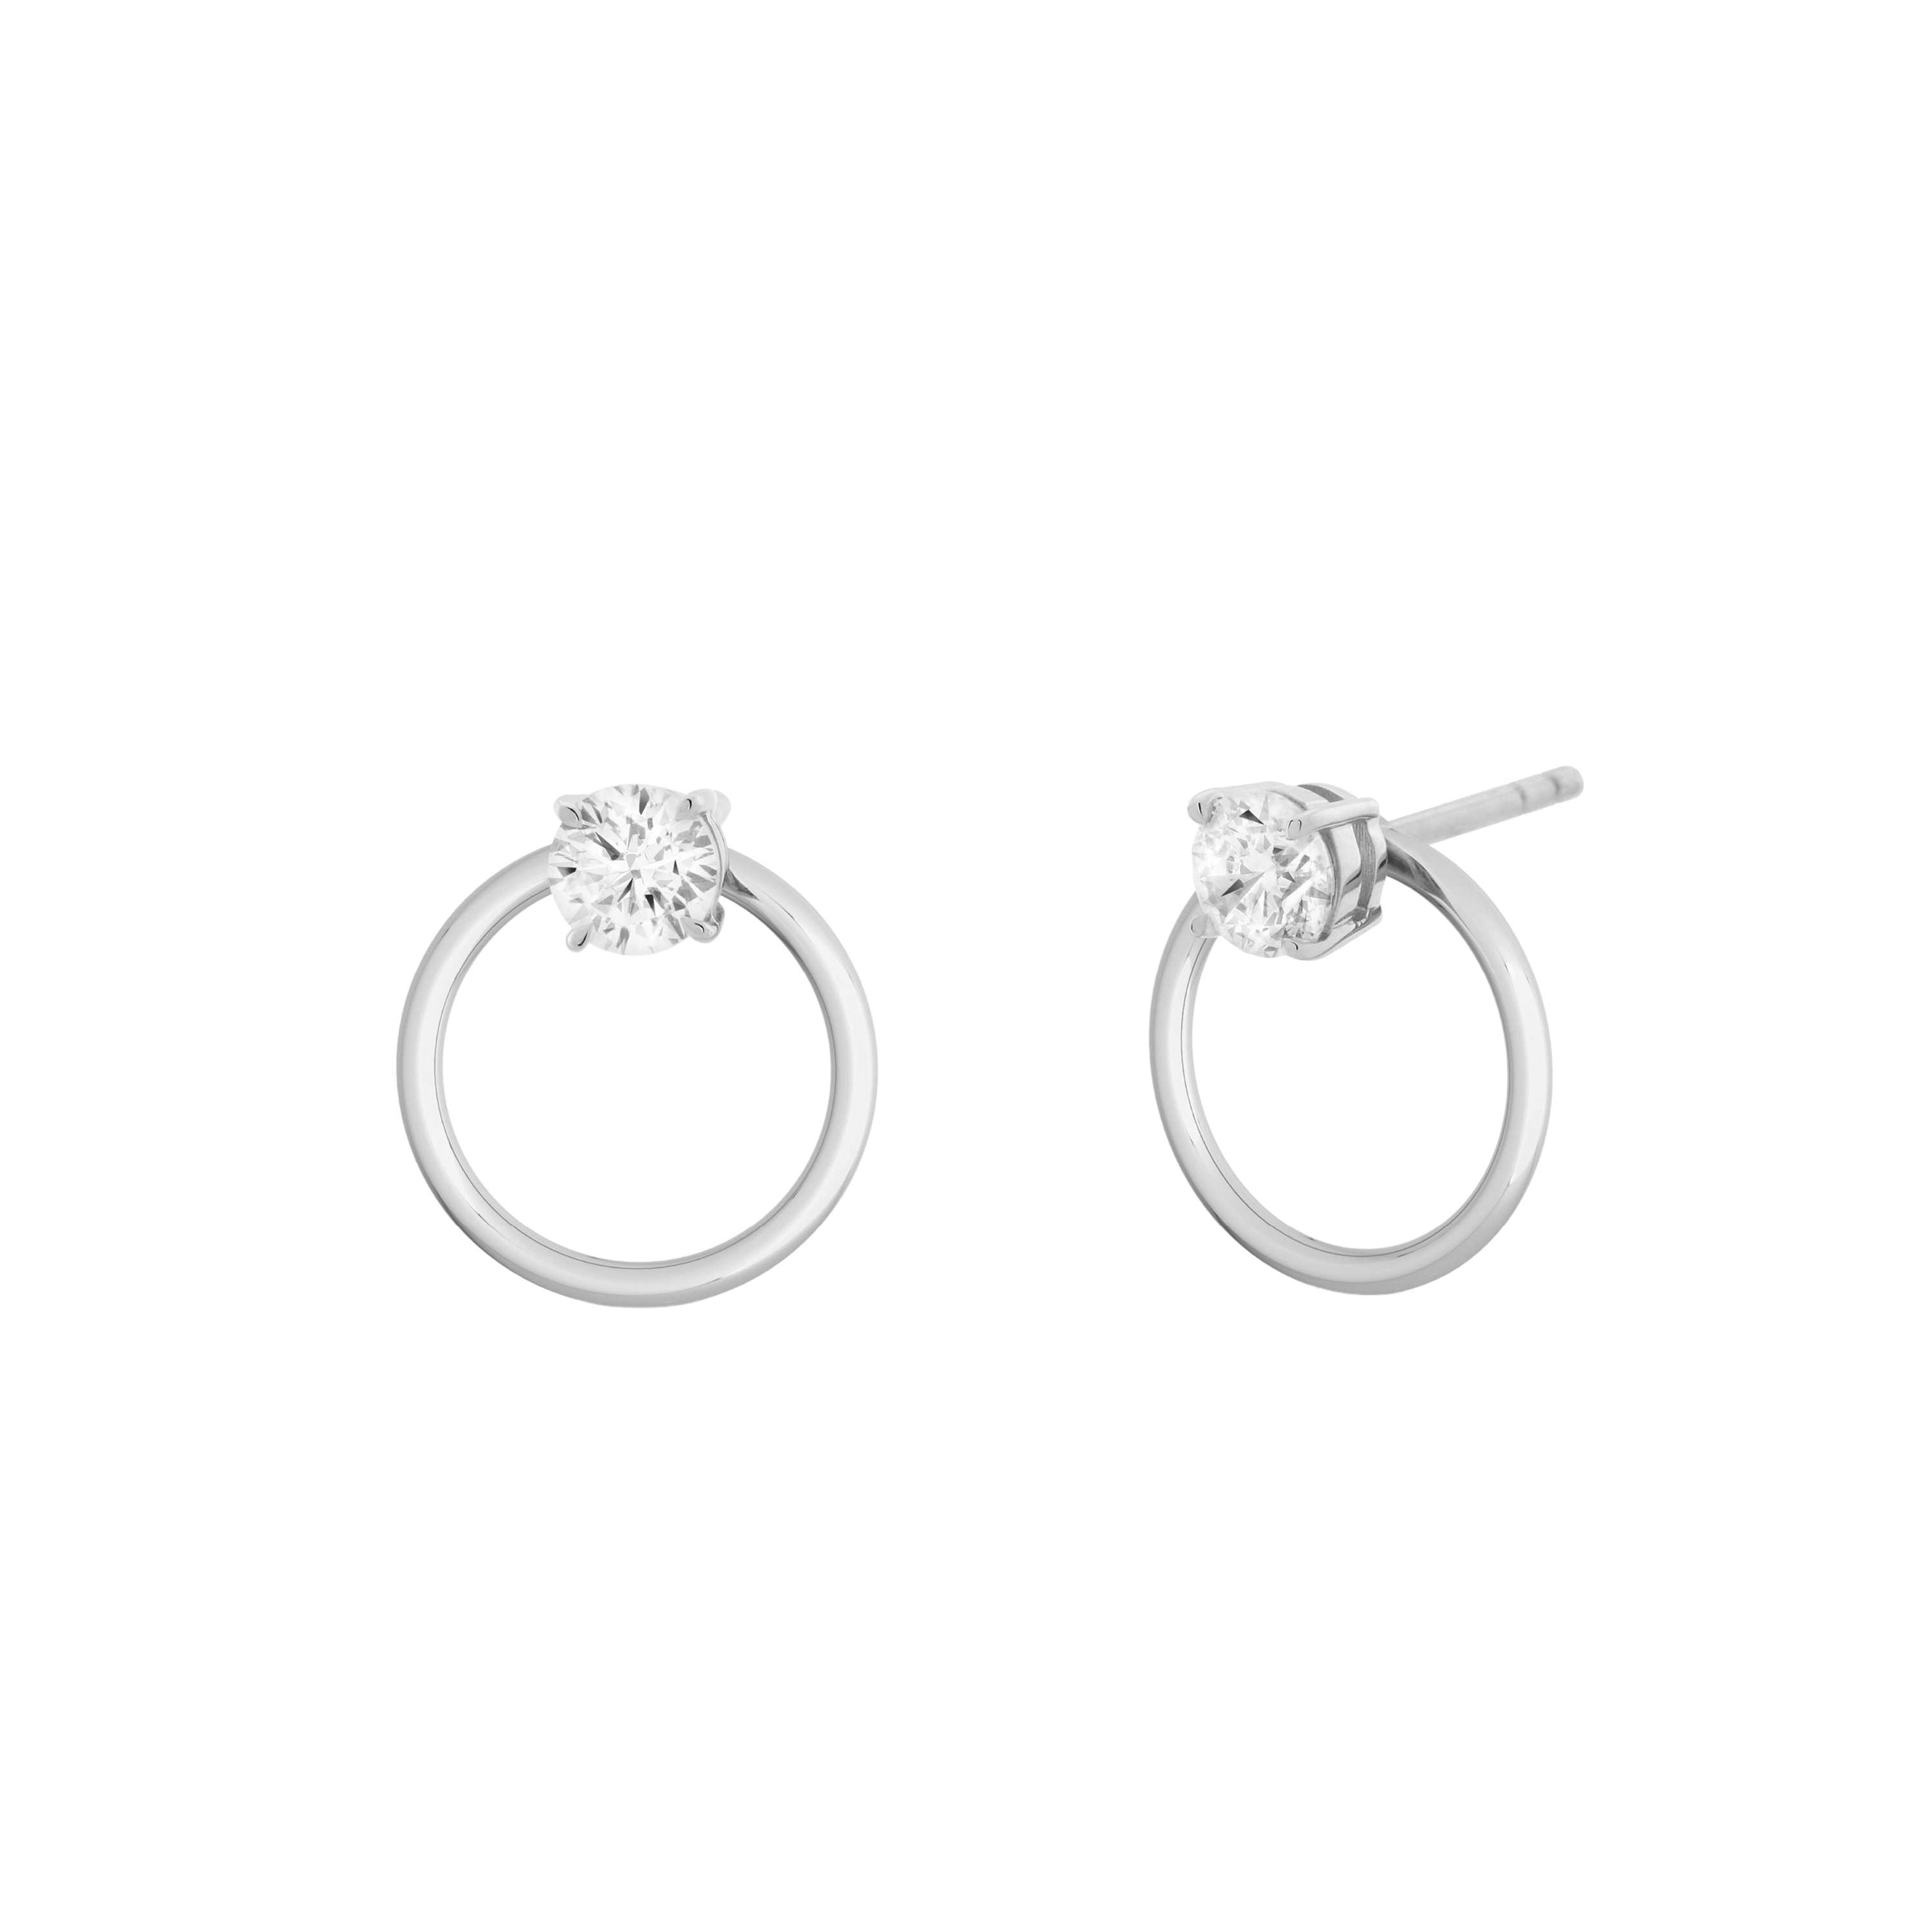 Orla 2-in-1 Diamond Solitaire Earrings. 18k White Gold or Platinum